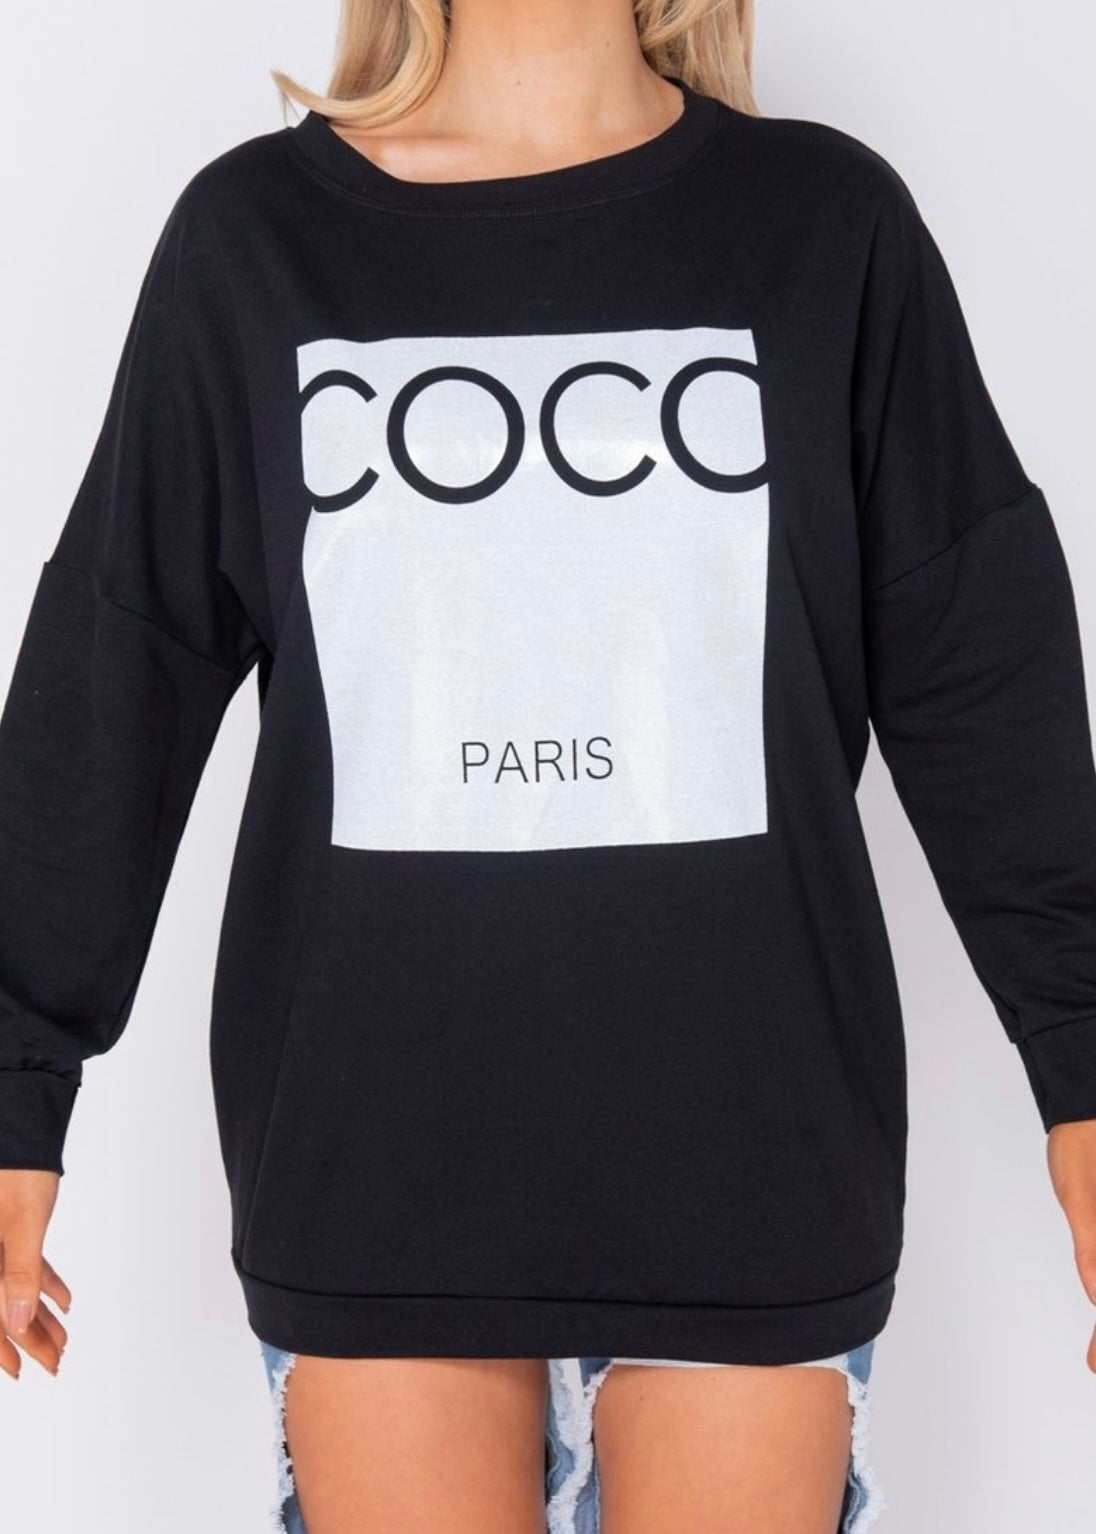 Coco Couture Sweatshirt